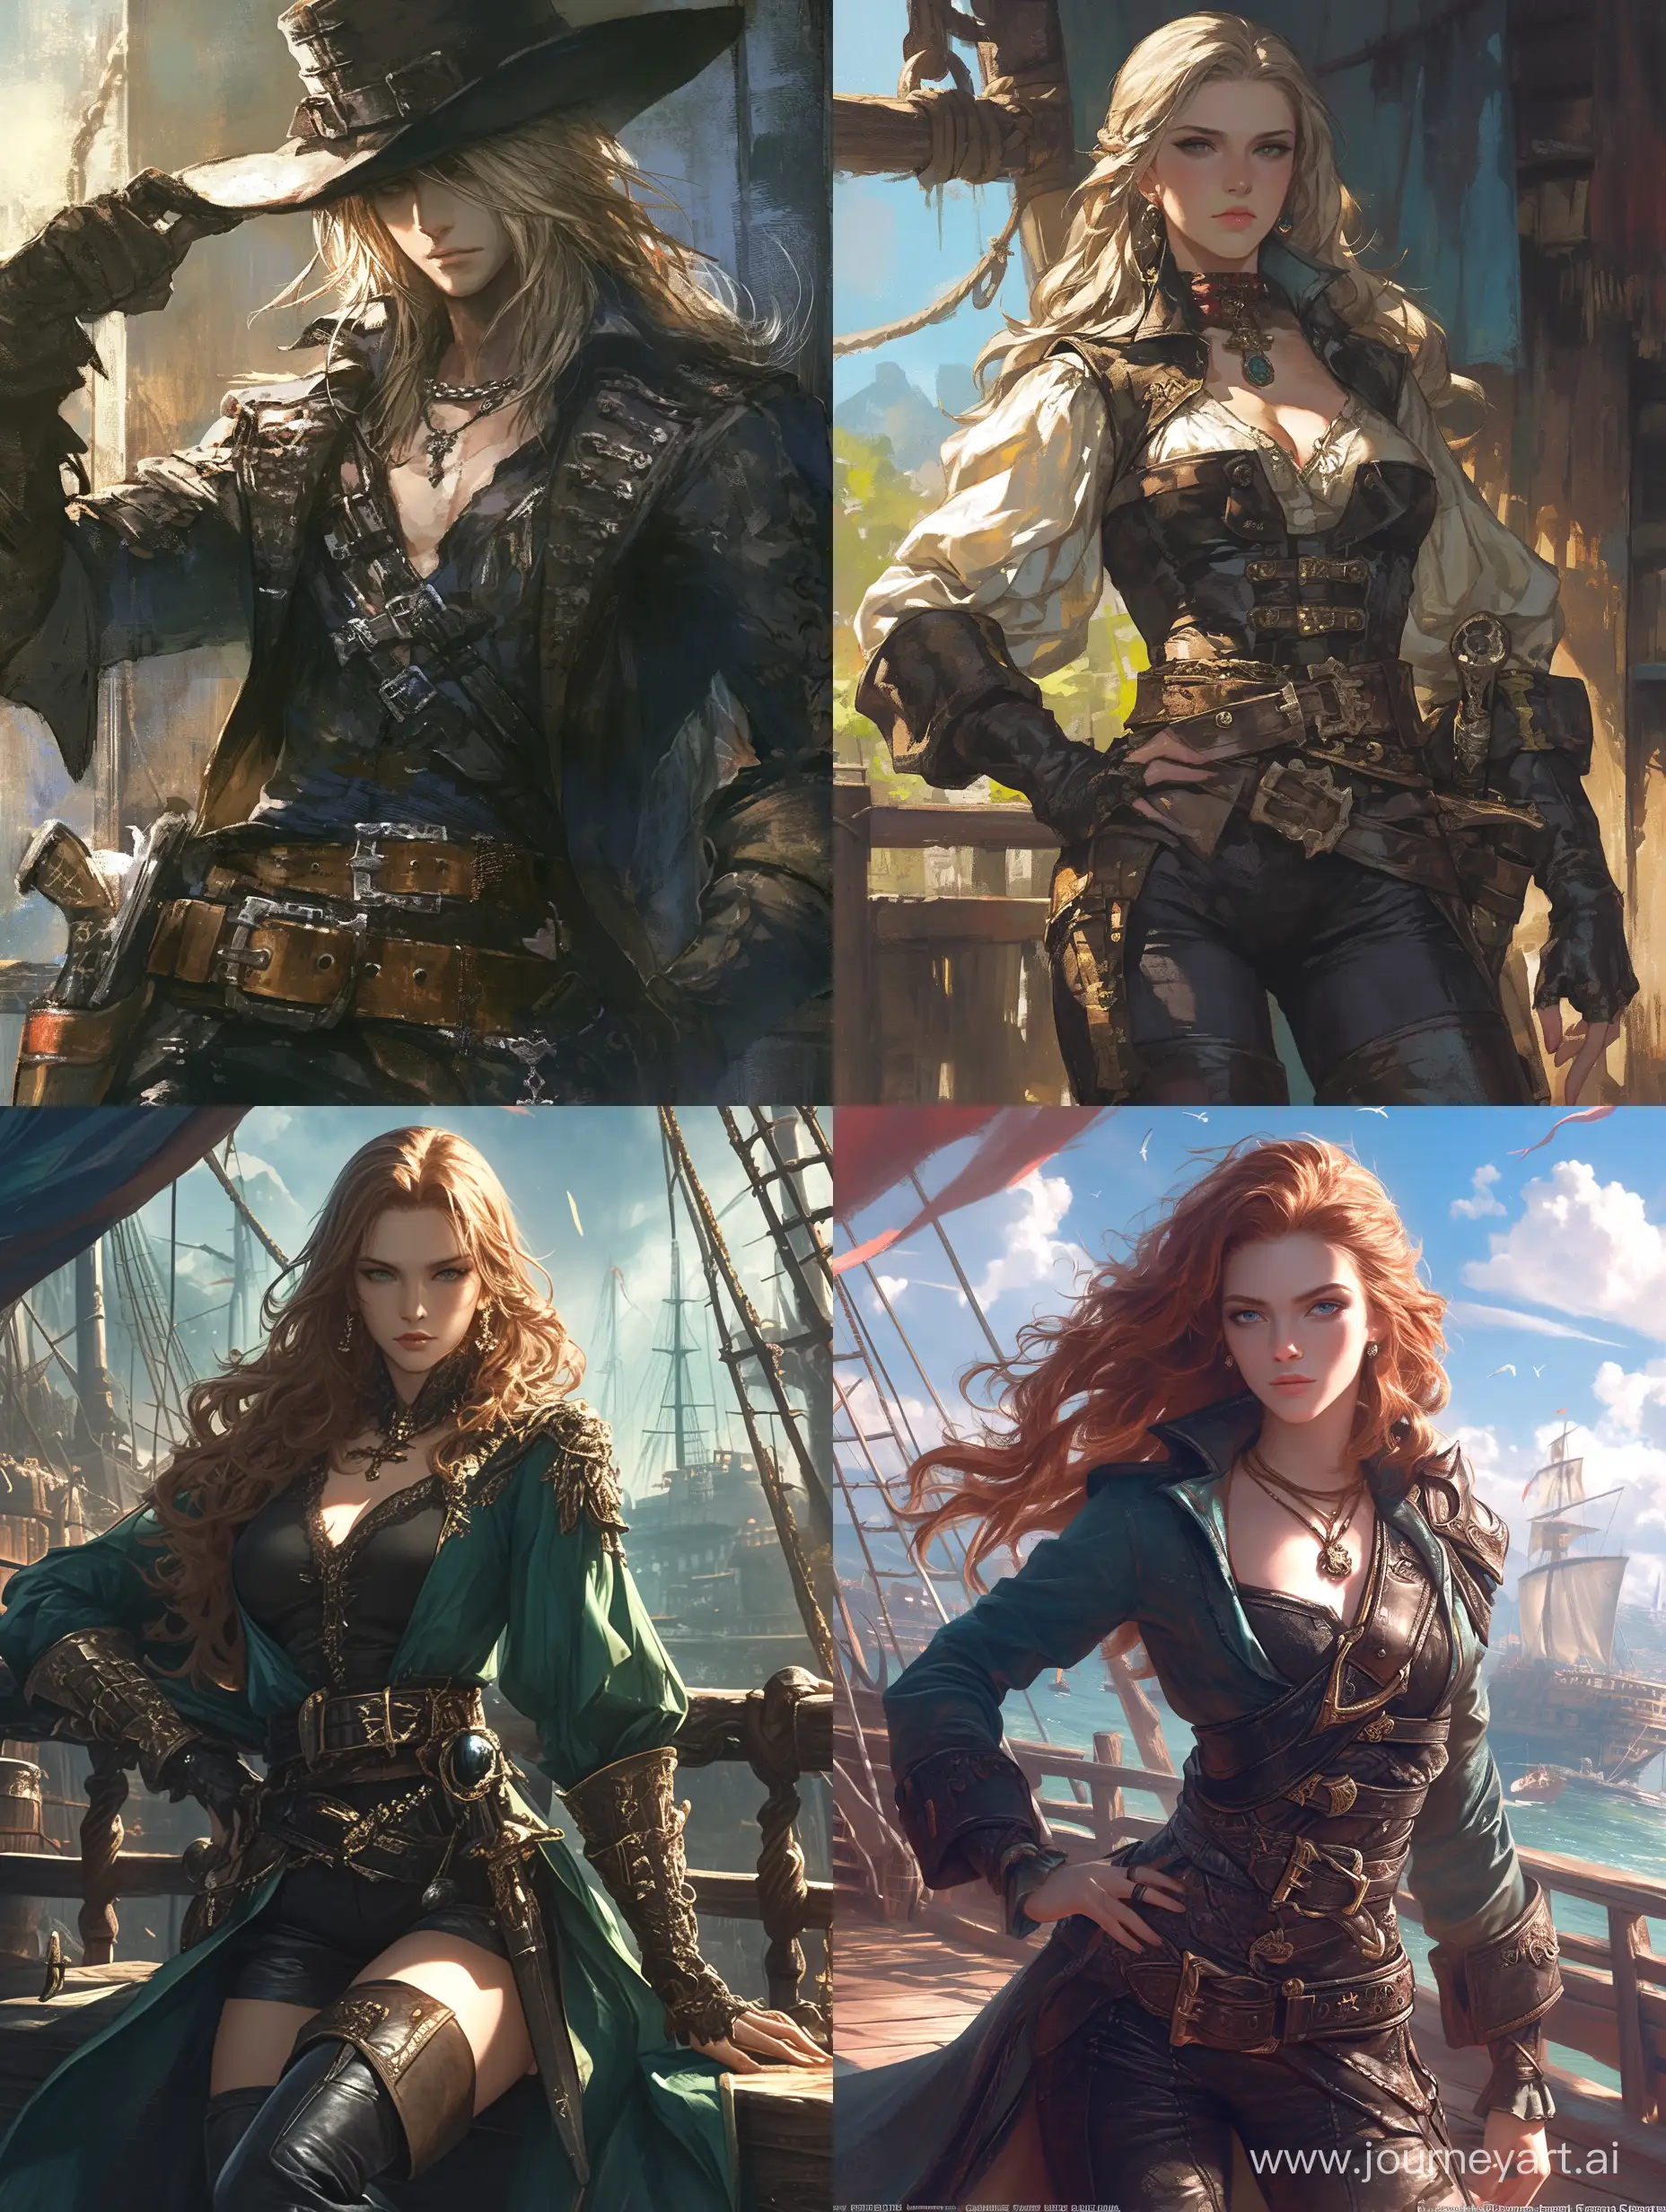 Intense-Coloration-Fantasy-Beautiful-Women-Pirates-Dancing-Aboard-a-Pirate-Ship